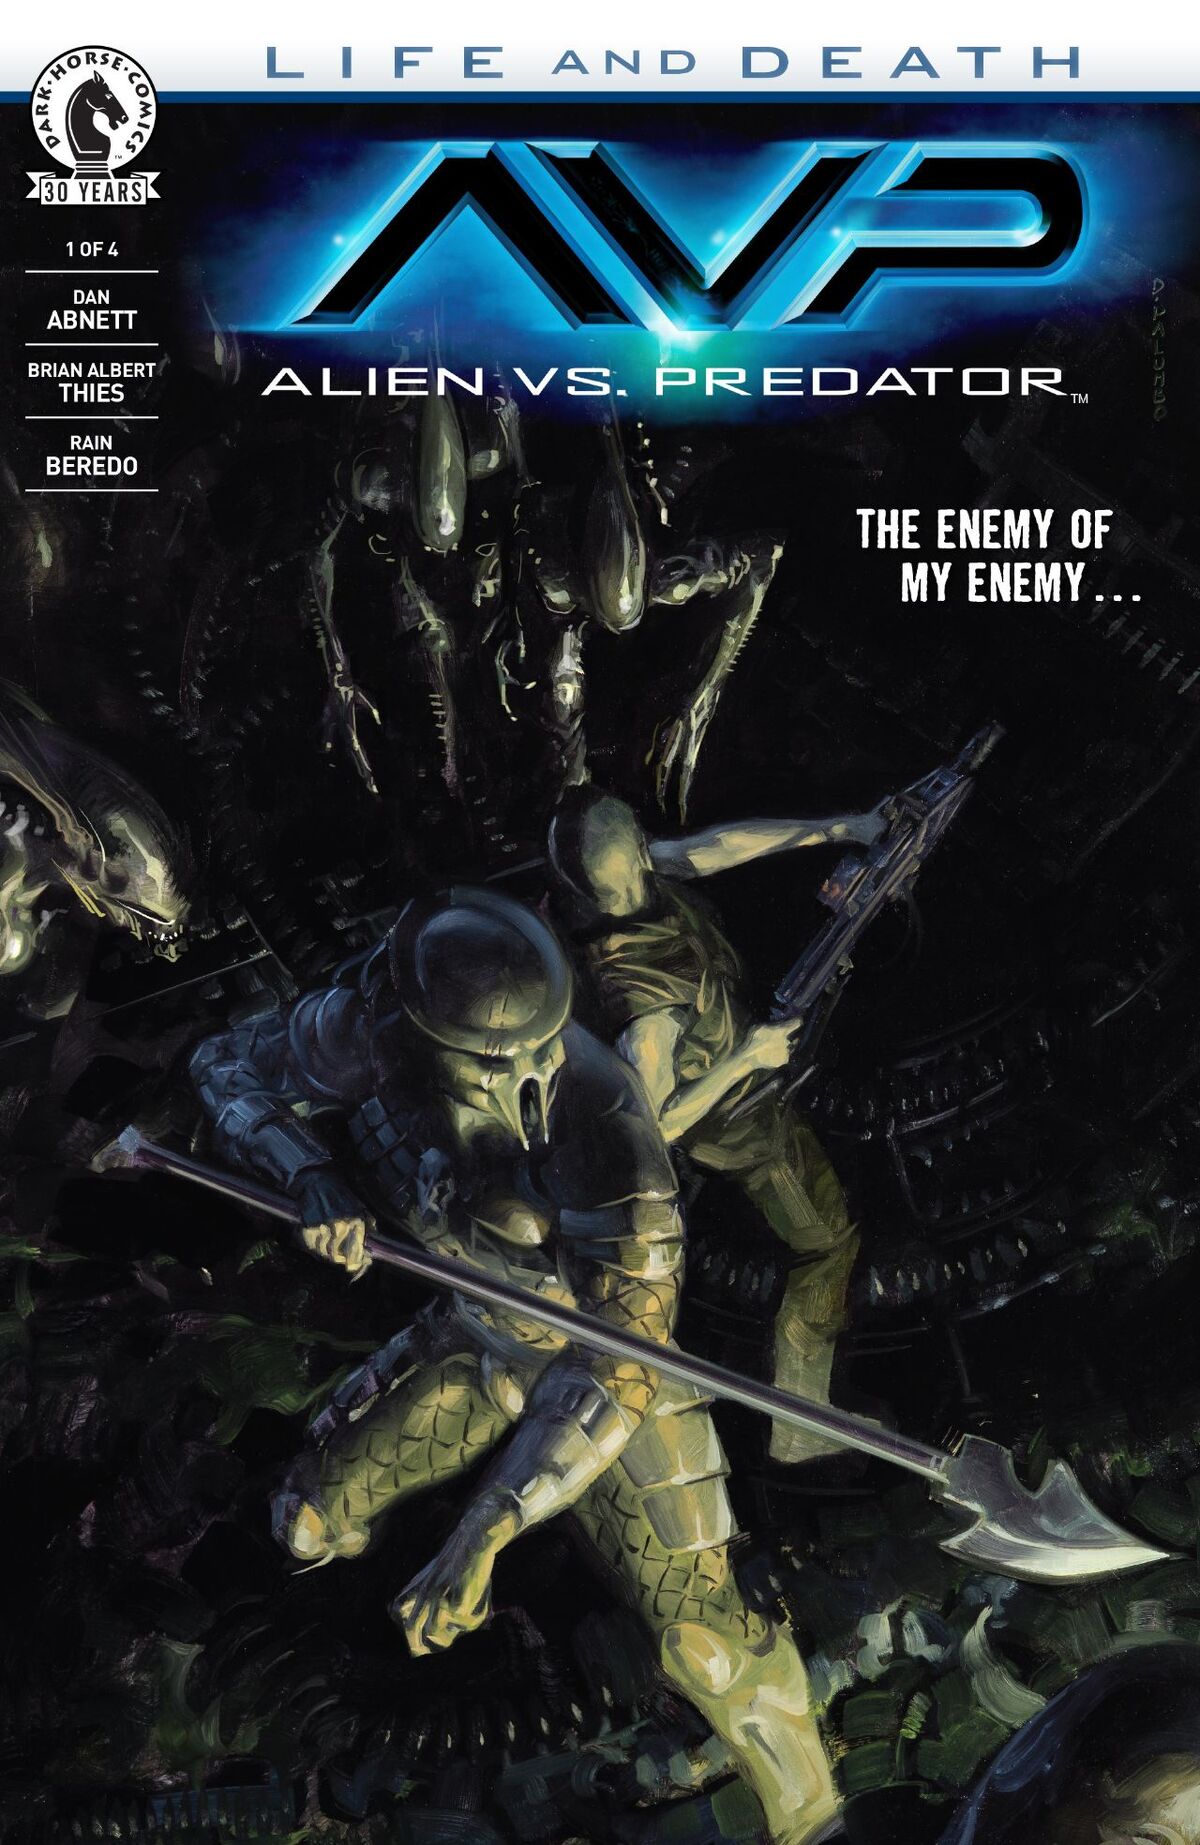 Alien vs. Predator'  vs. astrobiology